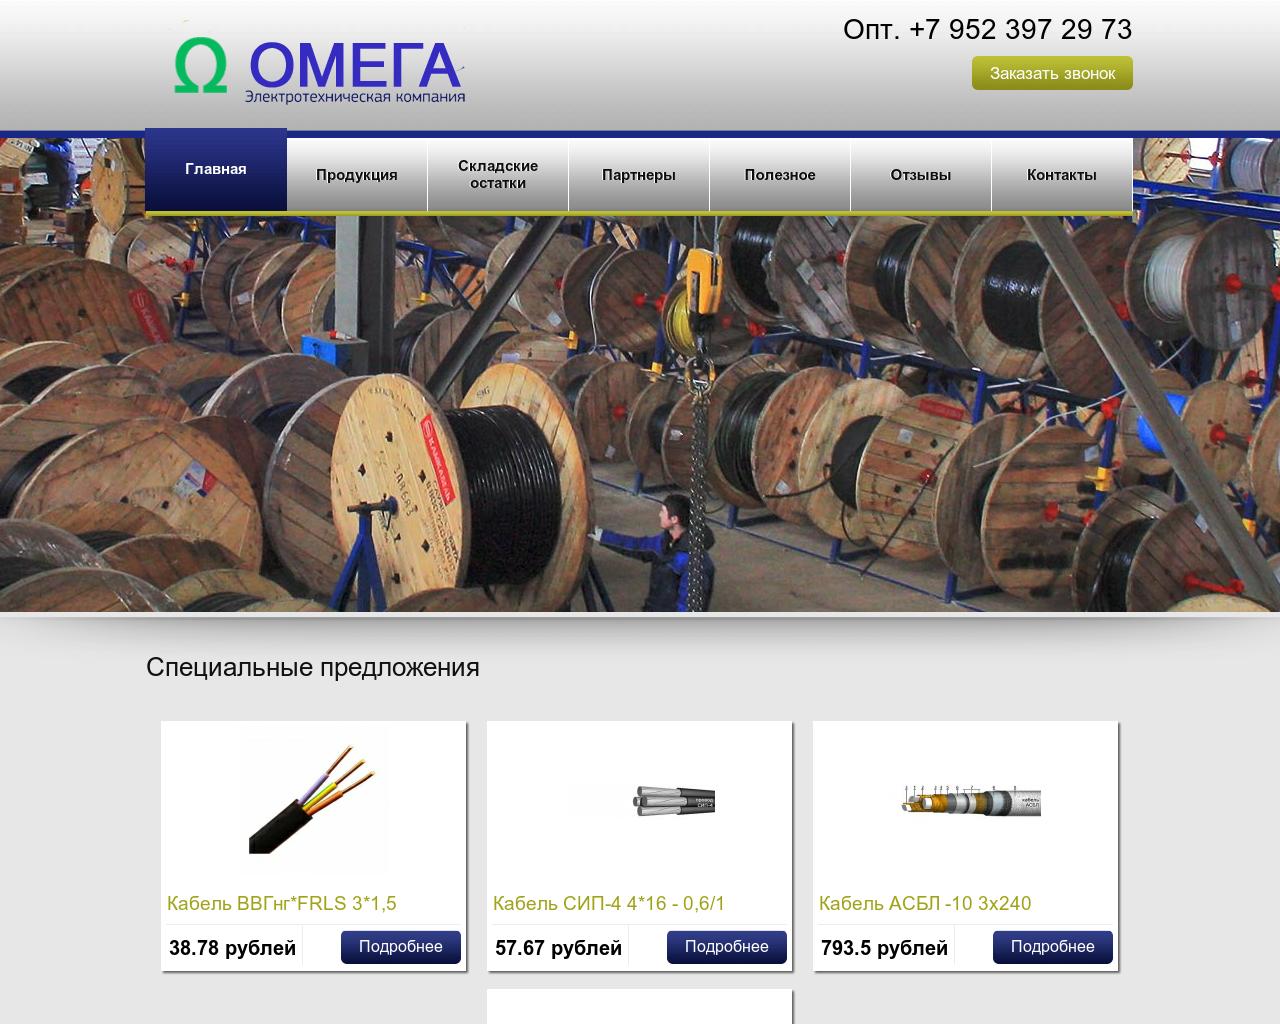 Изображение сайта omega-opt.ru в разрешении 1280x1024